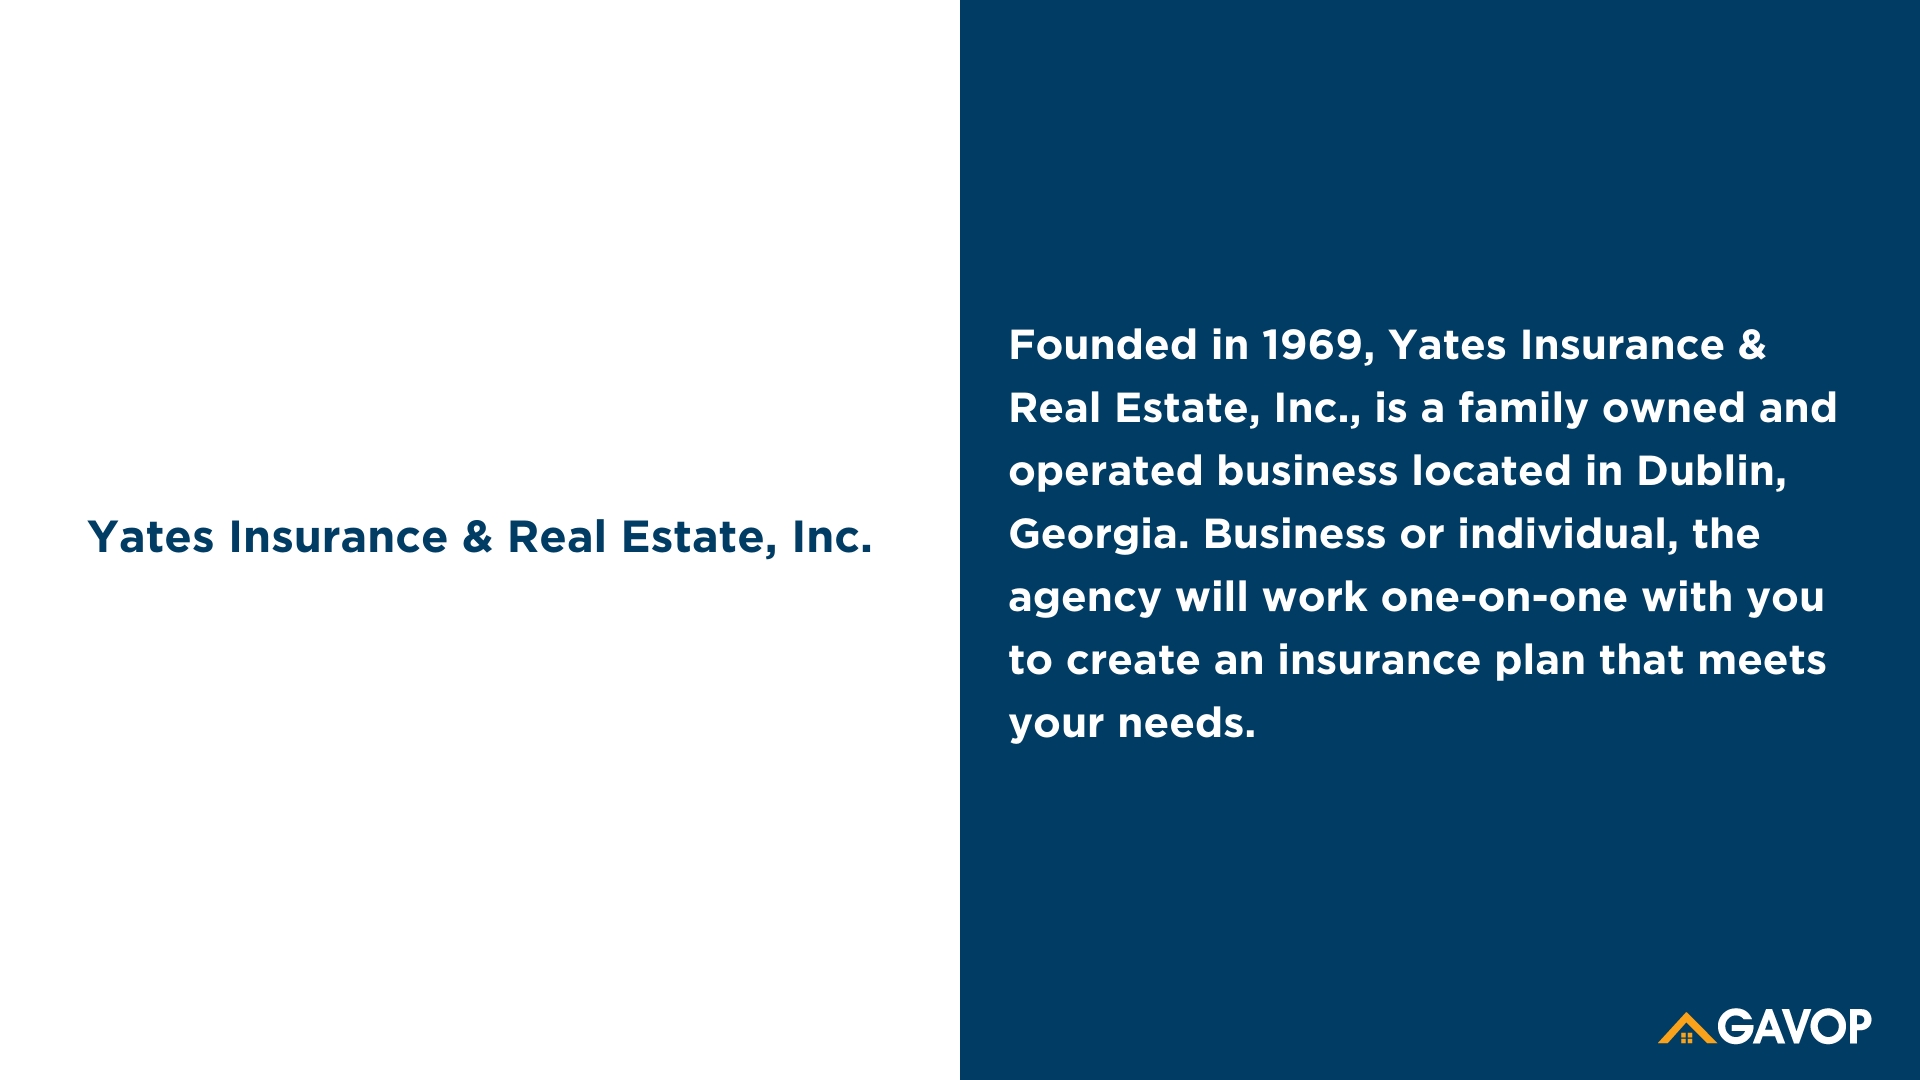 Yates Insurance & Real Estate, Inc.